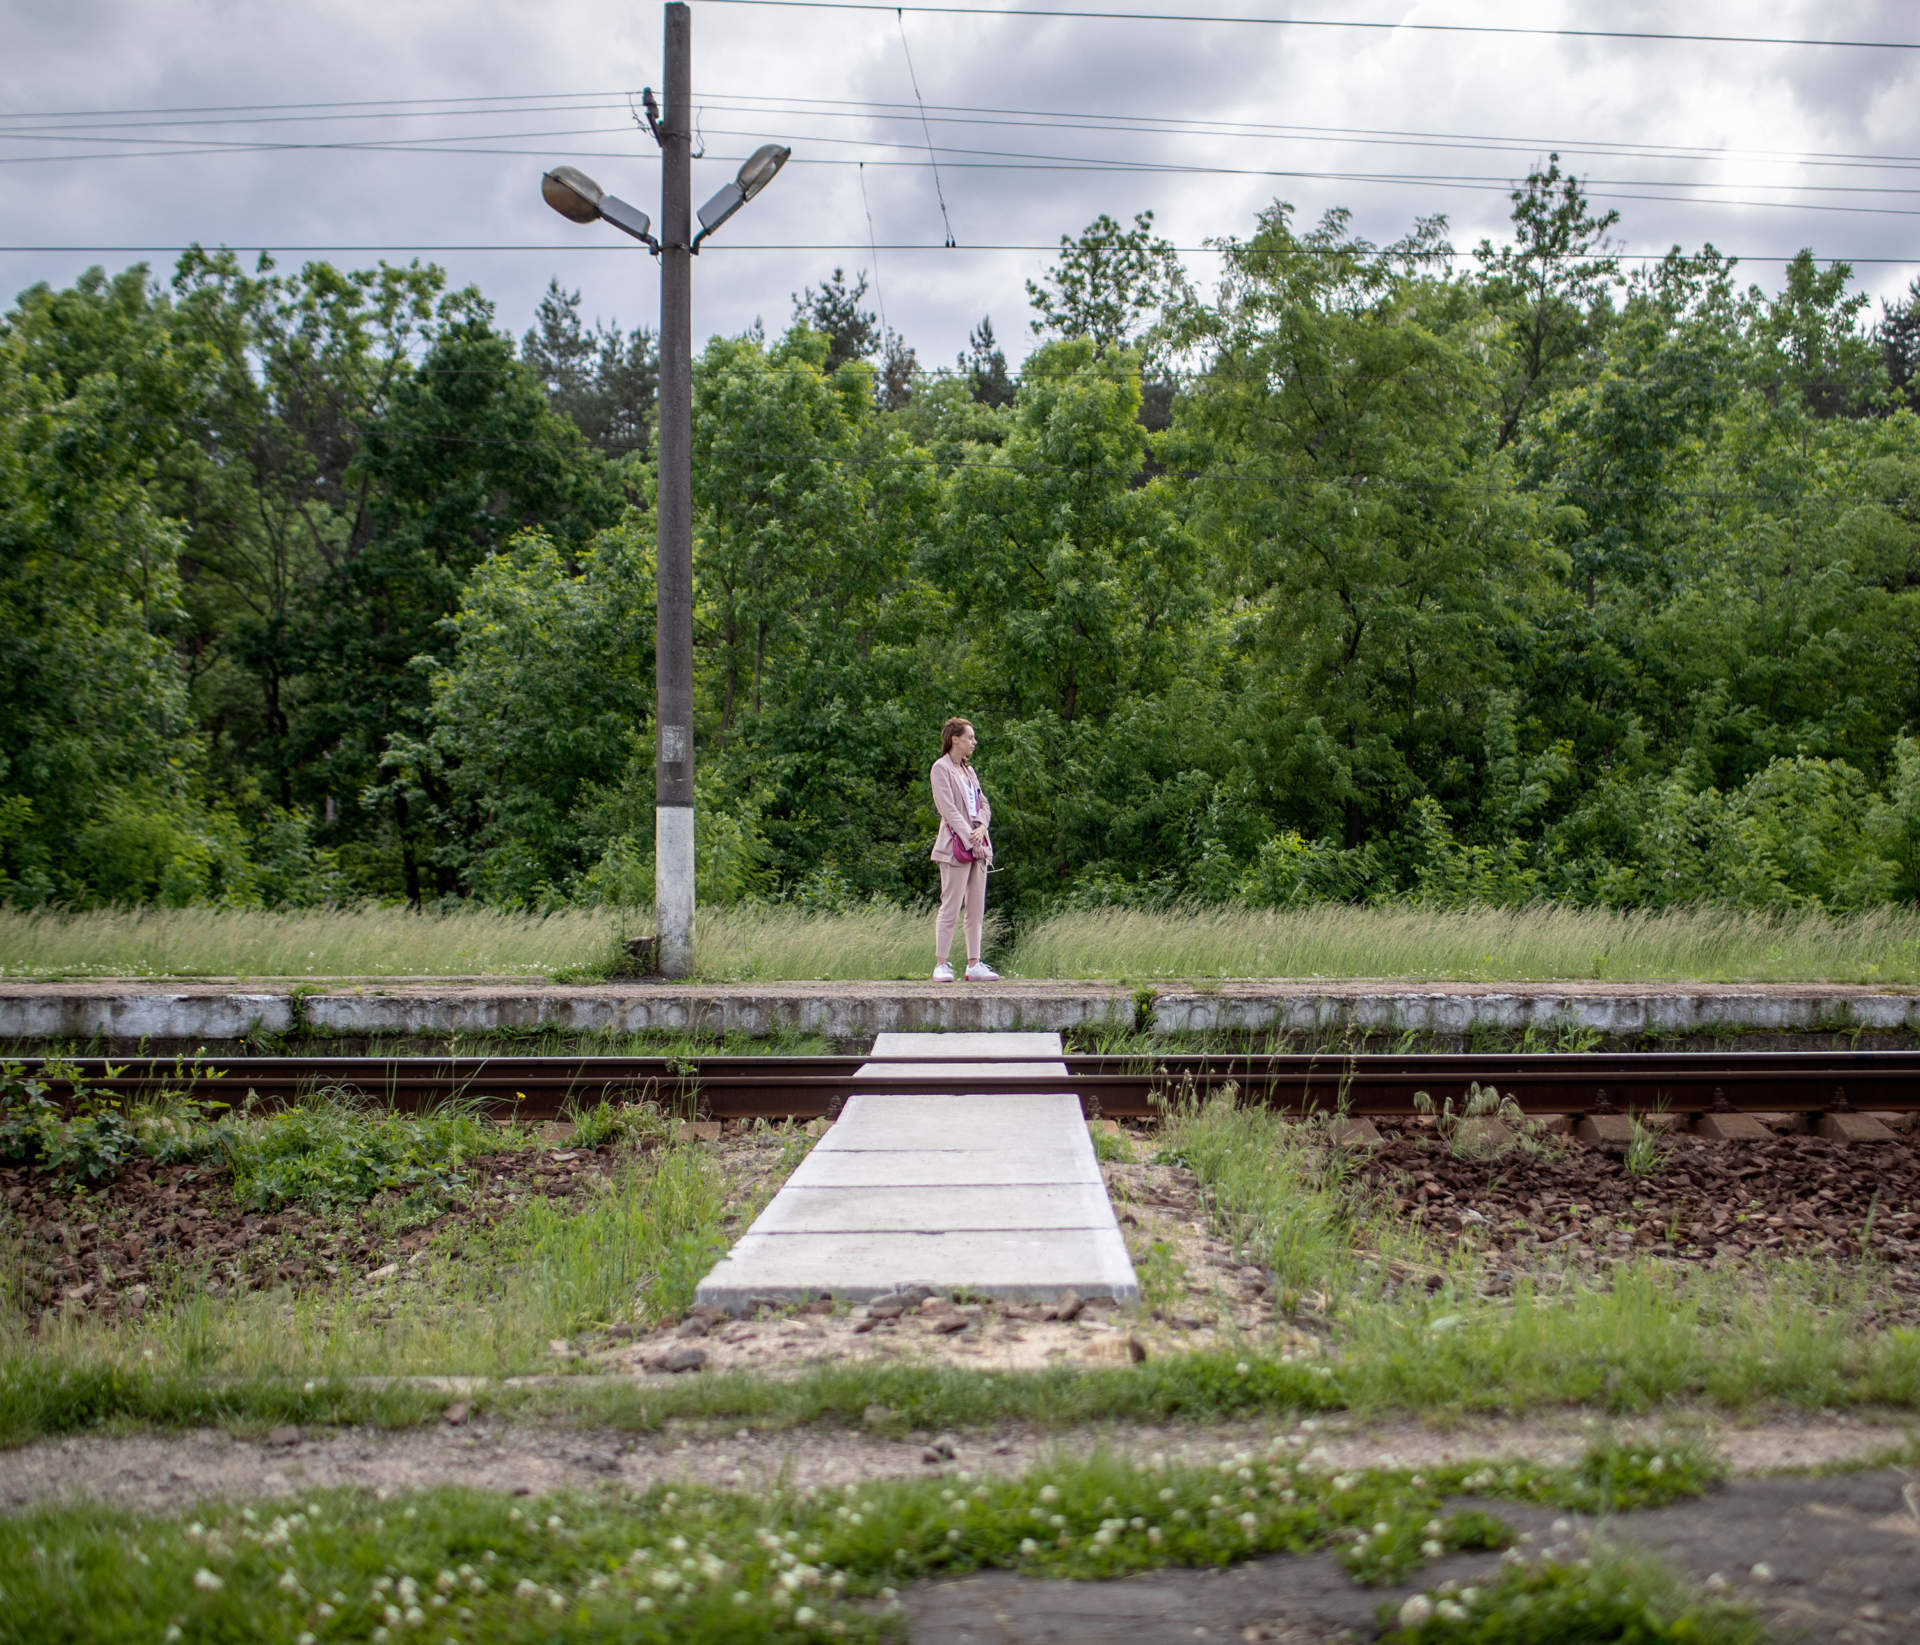 Helena Trus vid tågperrongen i Khrosnytsya, Ukraina.
Foto: Magnus Wennman